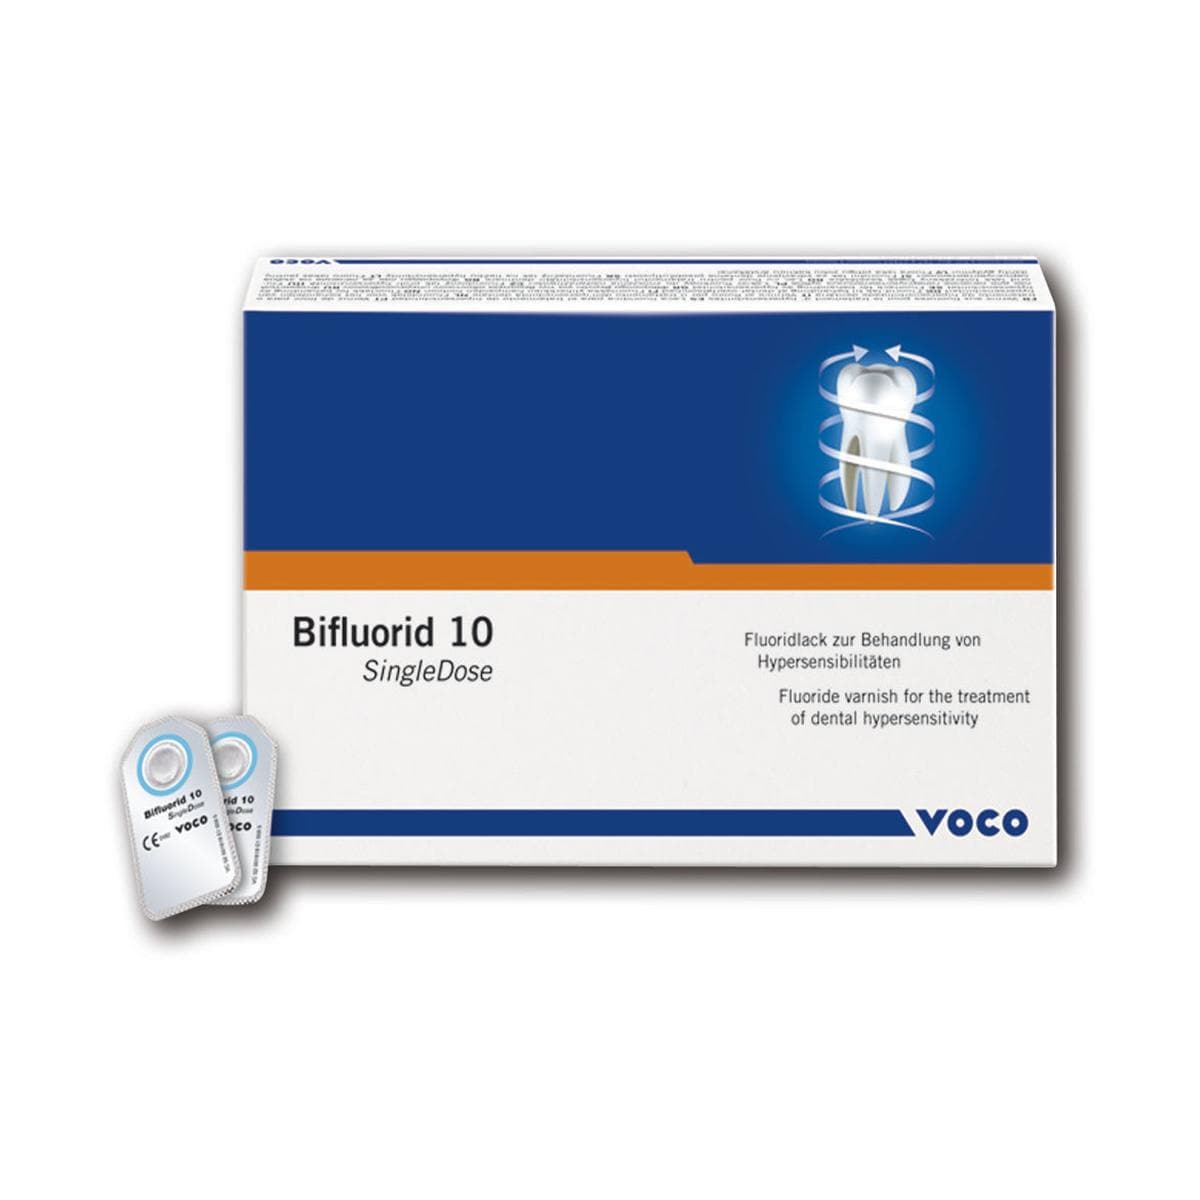 Bifluorid 10® SingleDose - Packung 200 SingleDose